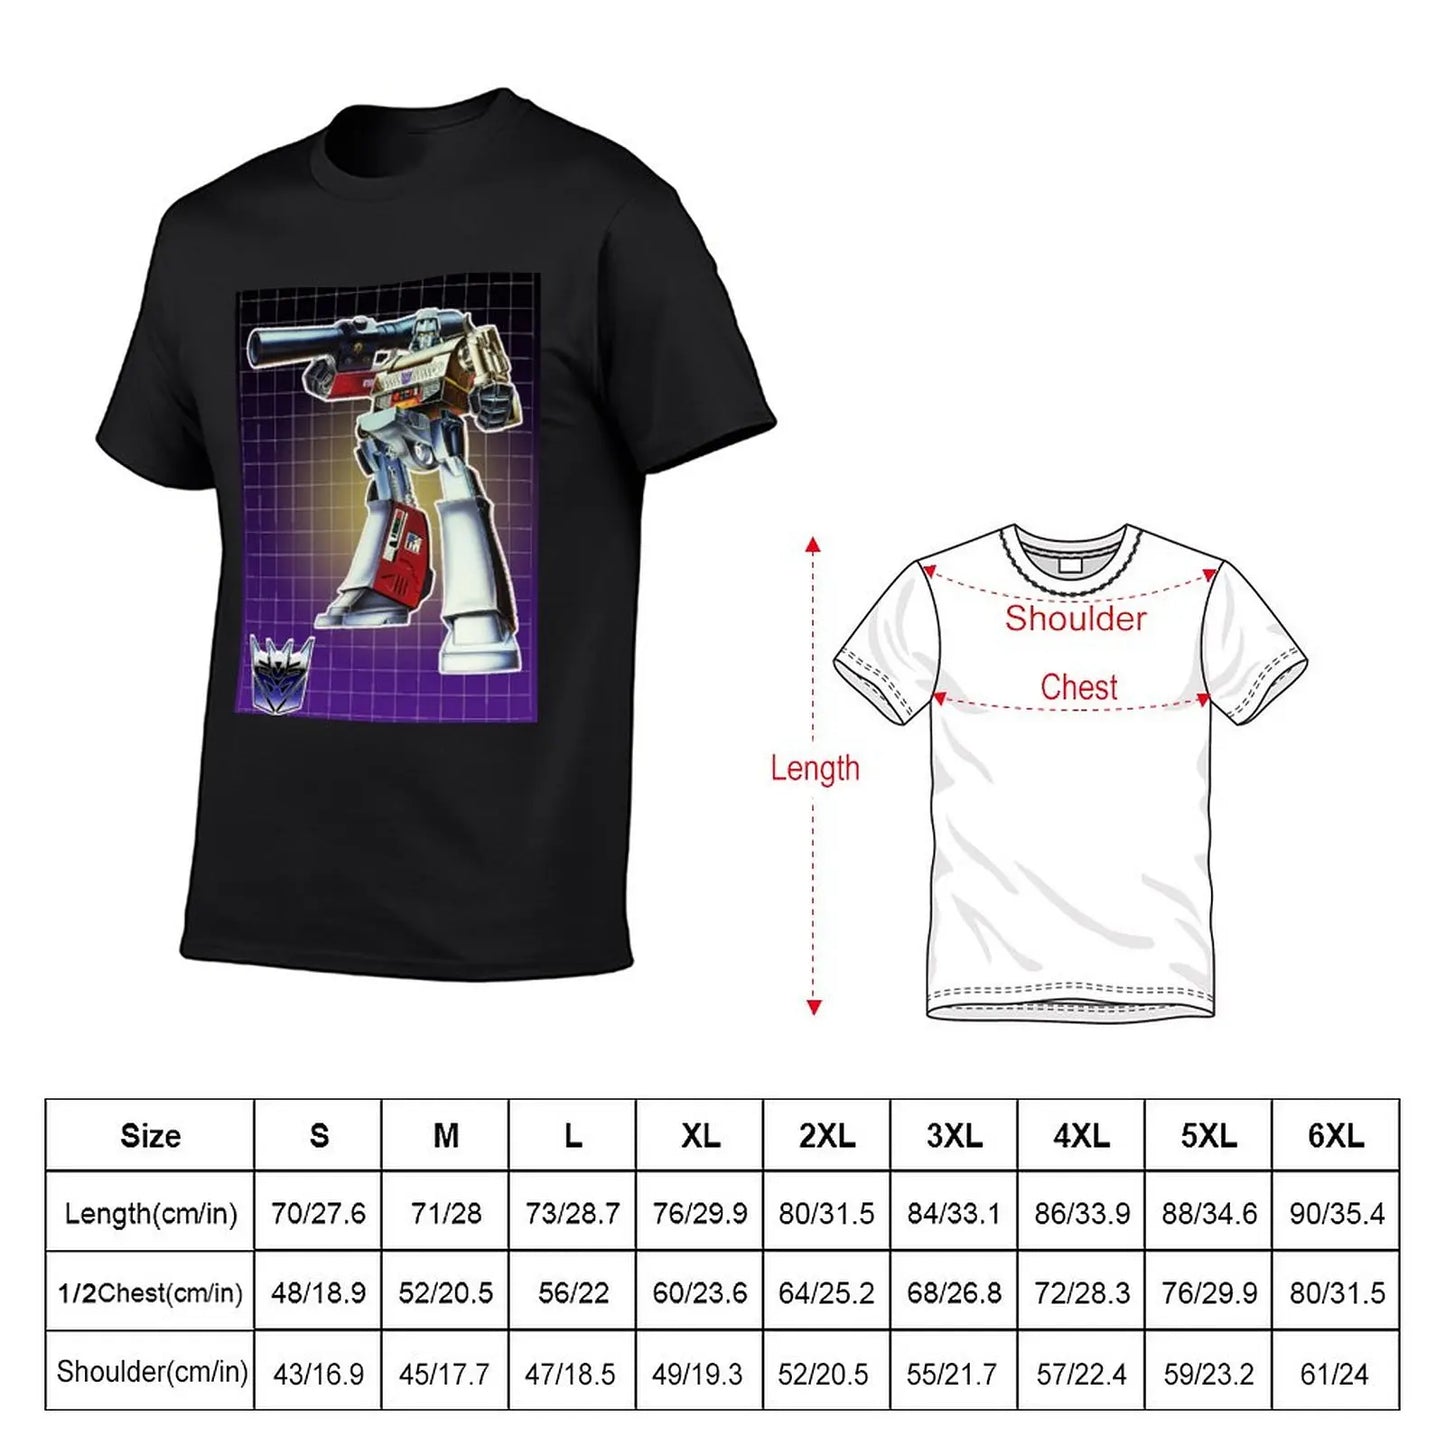 New MEGATRON G1 BOX ART T-Shirt Short sleeve tee custom t shirt graphic t shirts Men's clothing